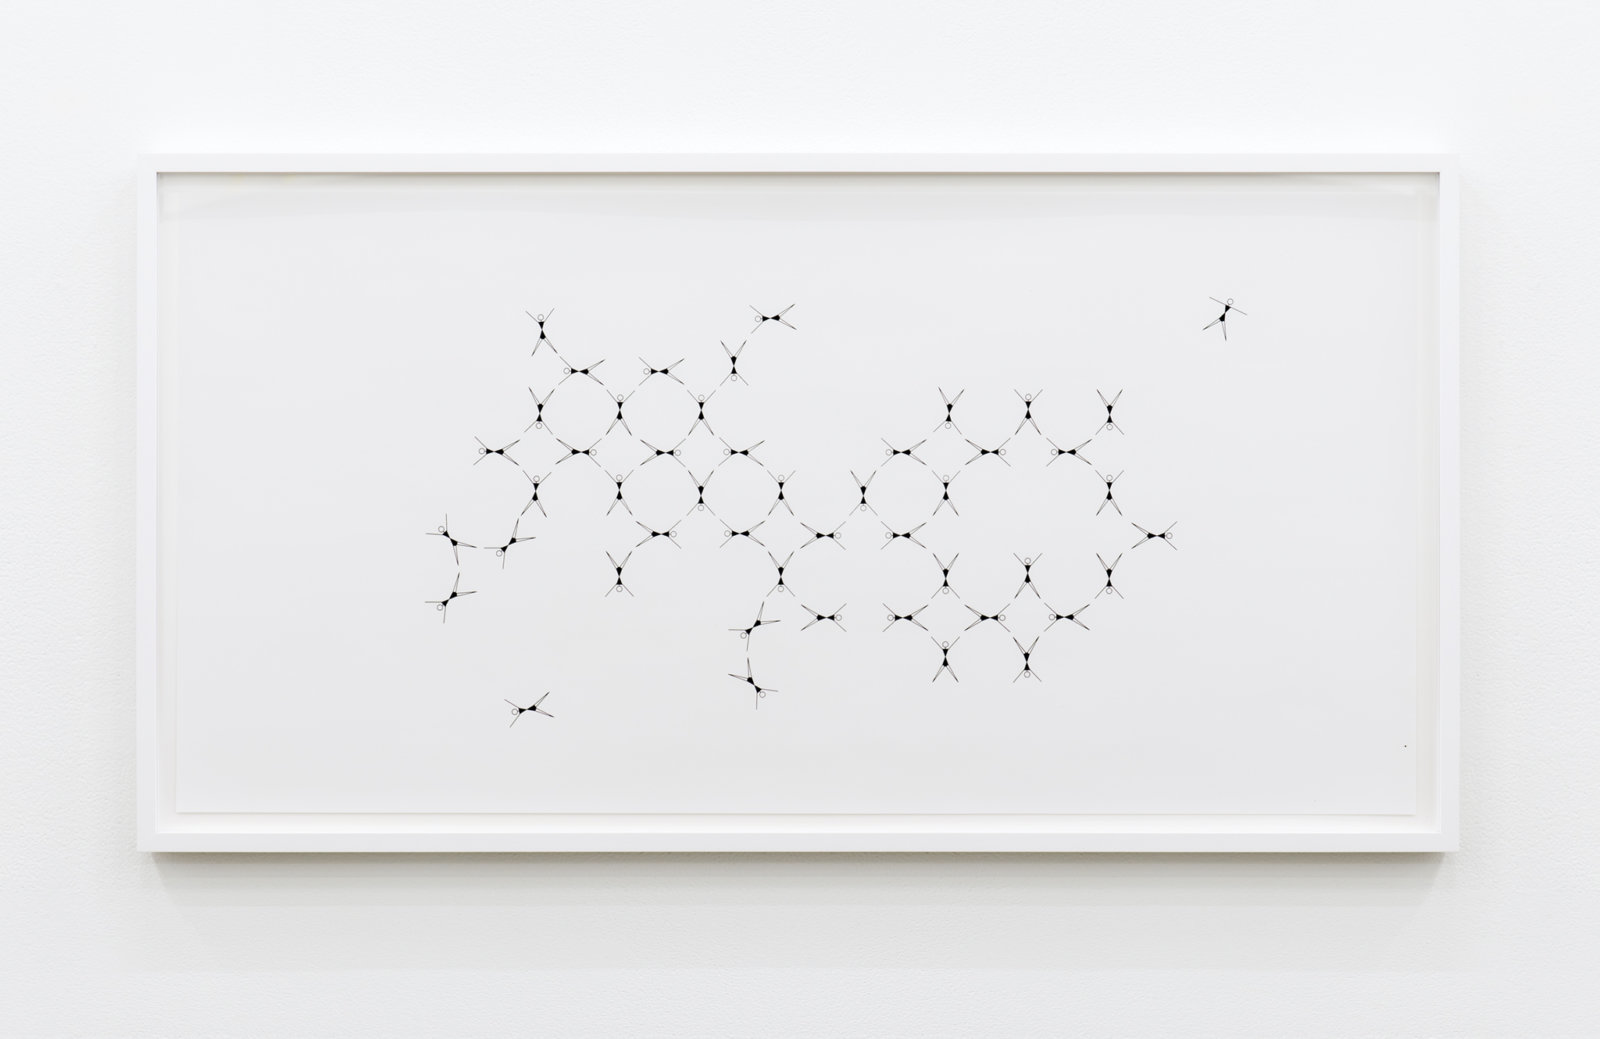 Janice Kerbel, Sync (Honeycomb), 2017, double sided silkscreen print on paper, 33 x 17 in. (84 x 42 cm)